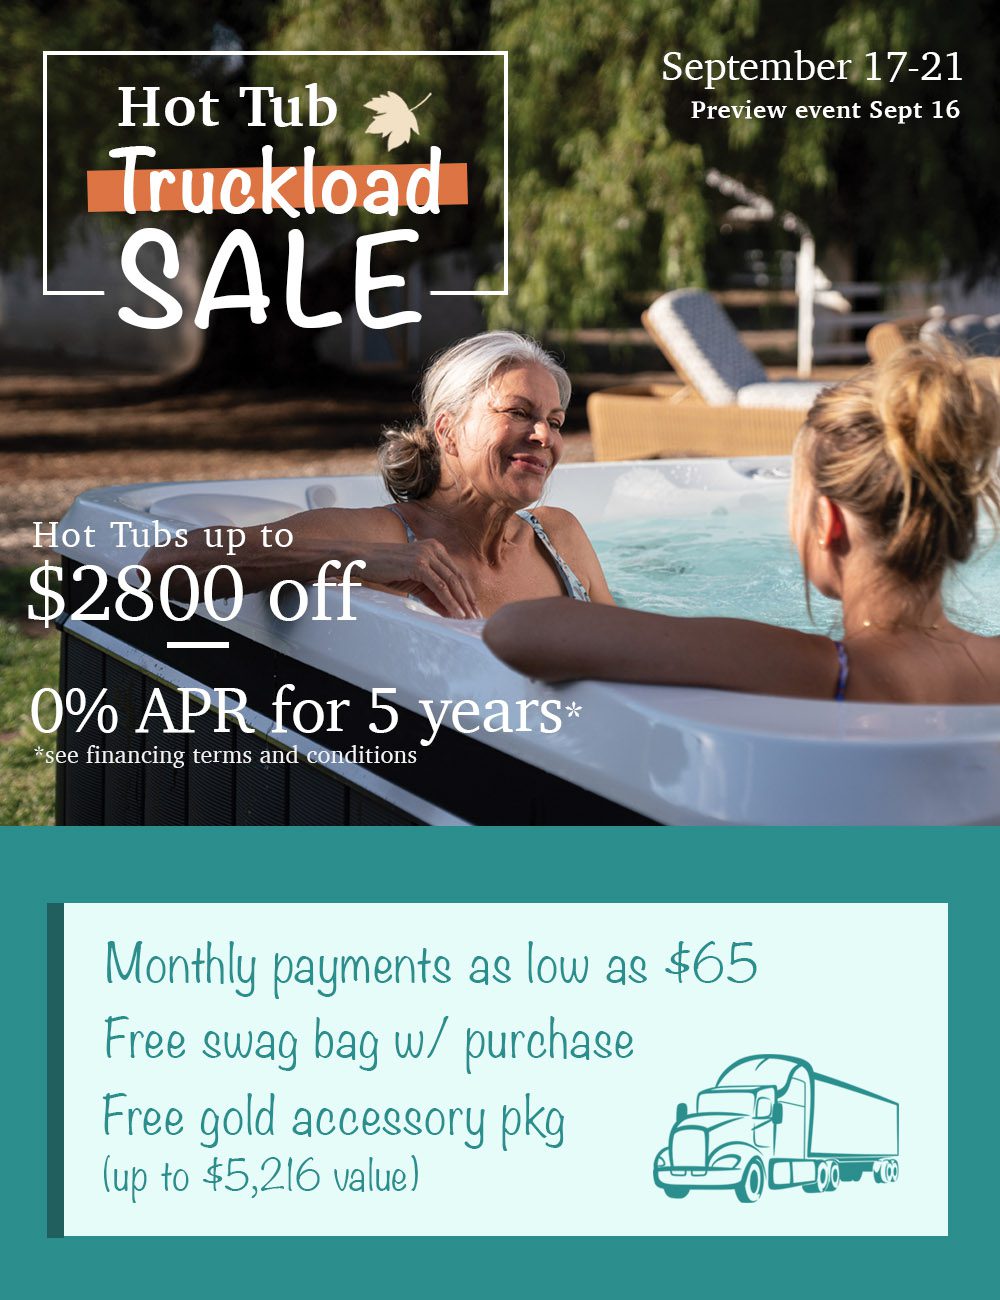 hot-tub-truckload-sale-lp